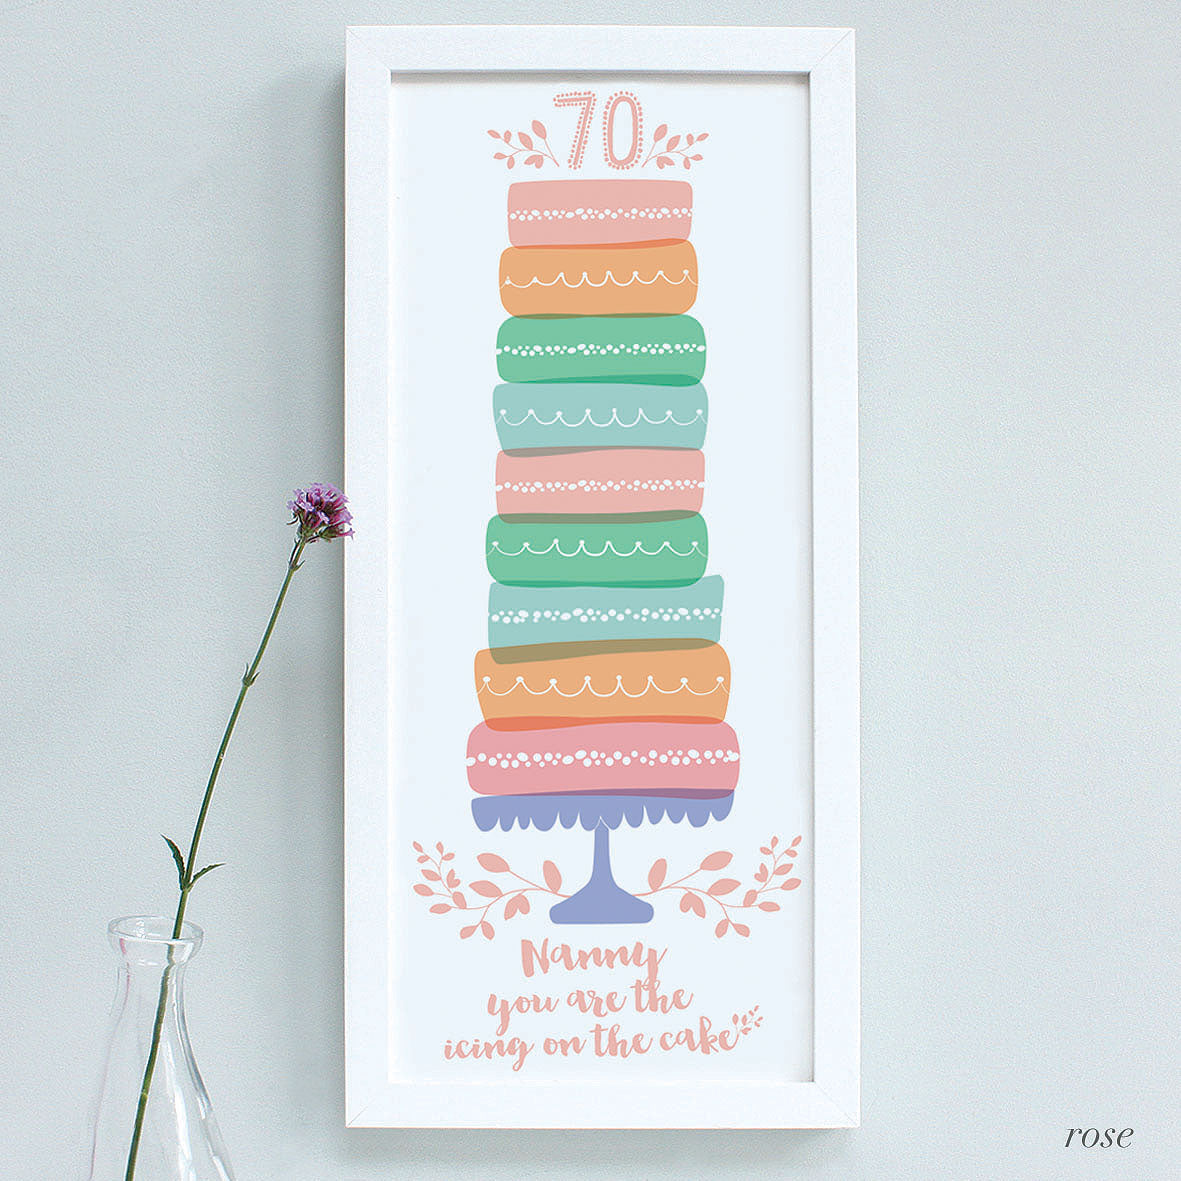 personalised rose 70th birthday cake print, white frame